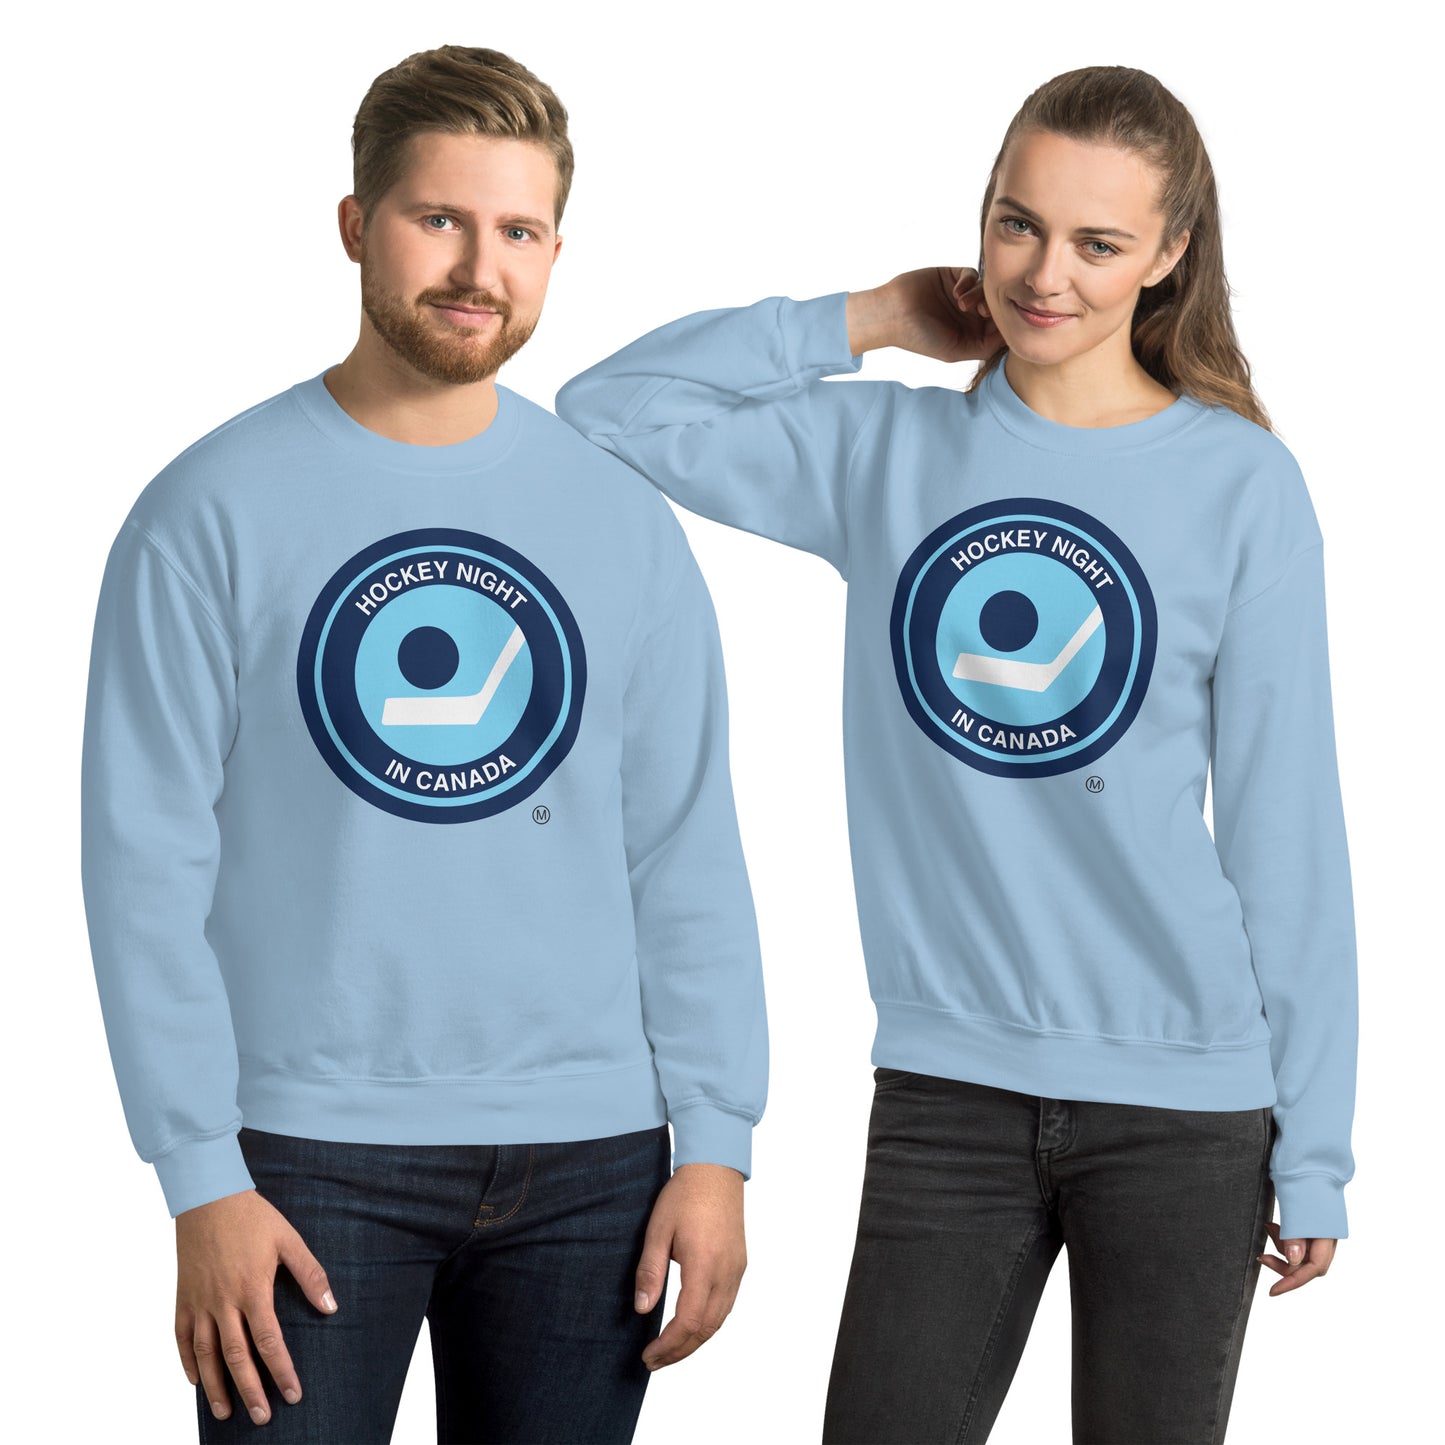 Hockey Night In Canada Retro Logo, Hockey Sweatshirt, HNIC Sweatshirt - Licensed CBC Apparel, Light Blue Unisex